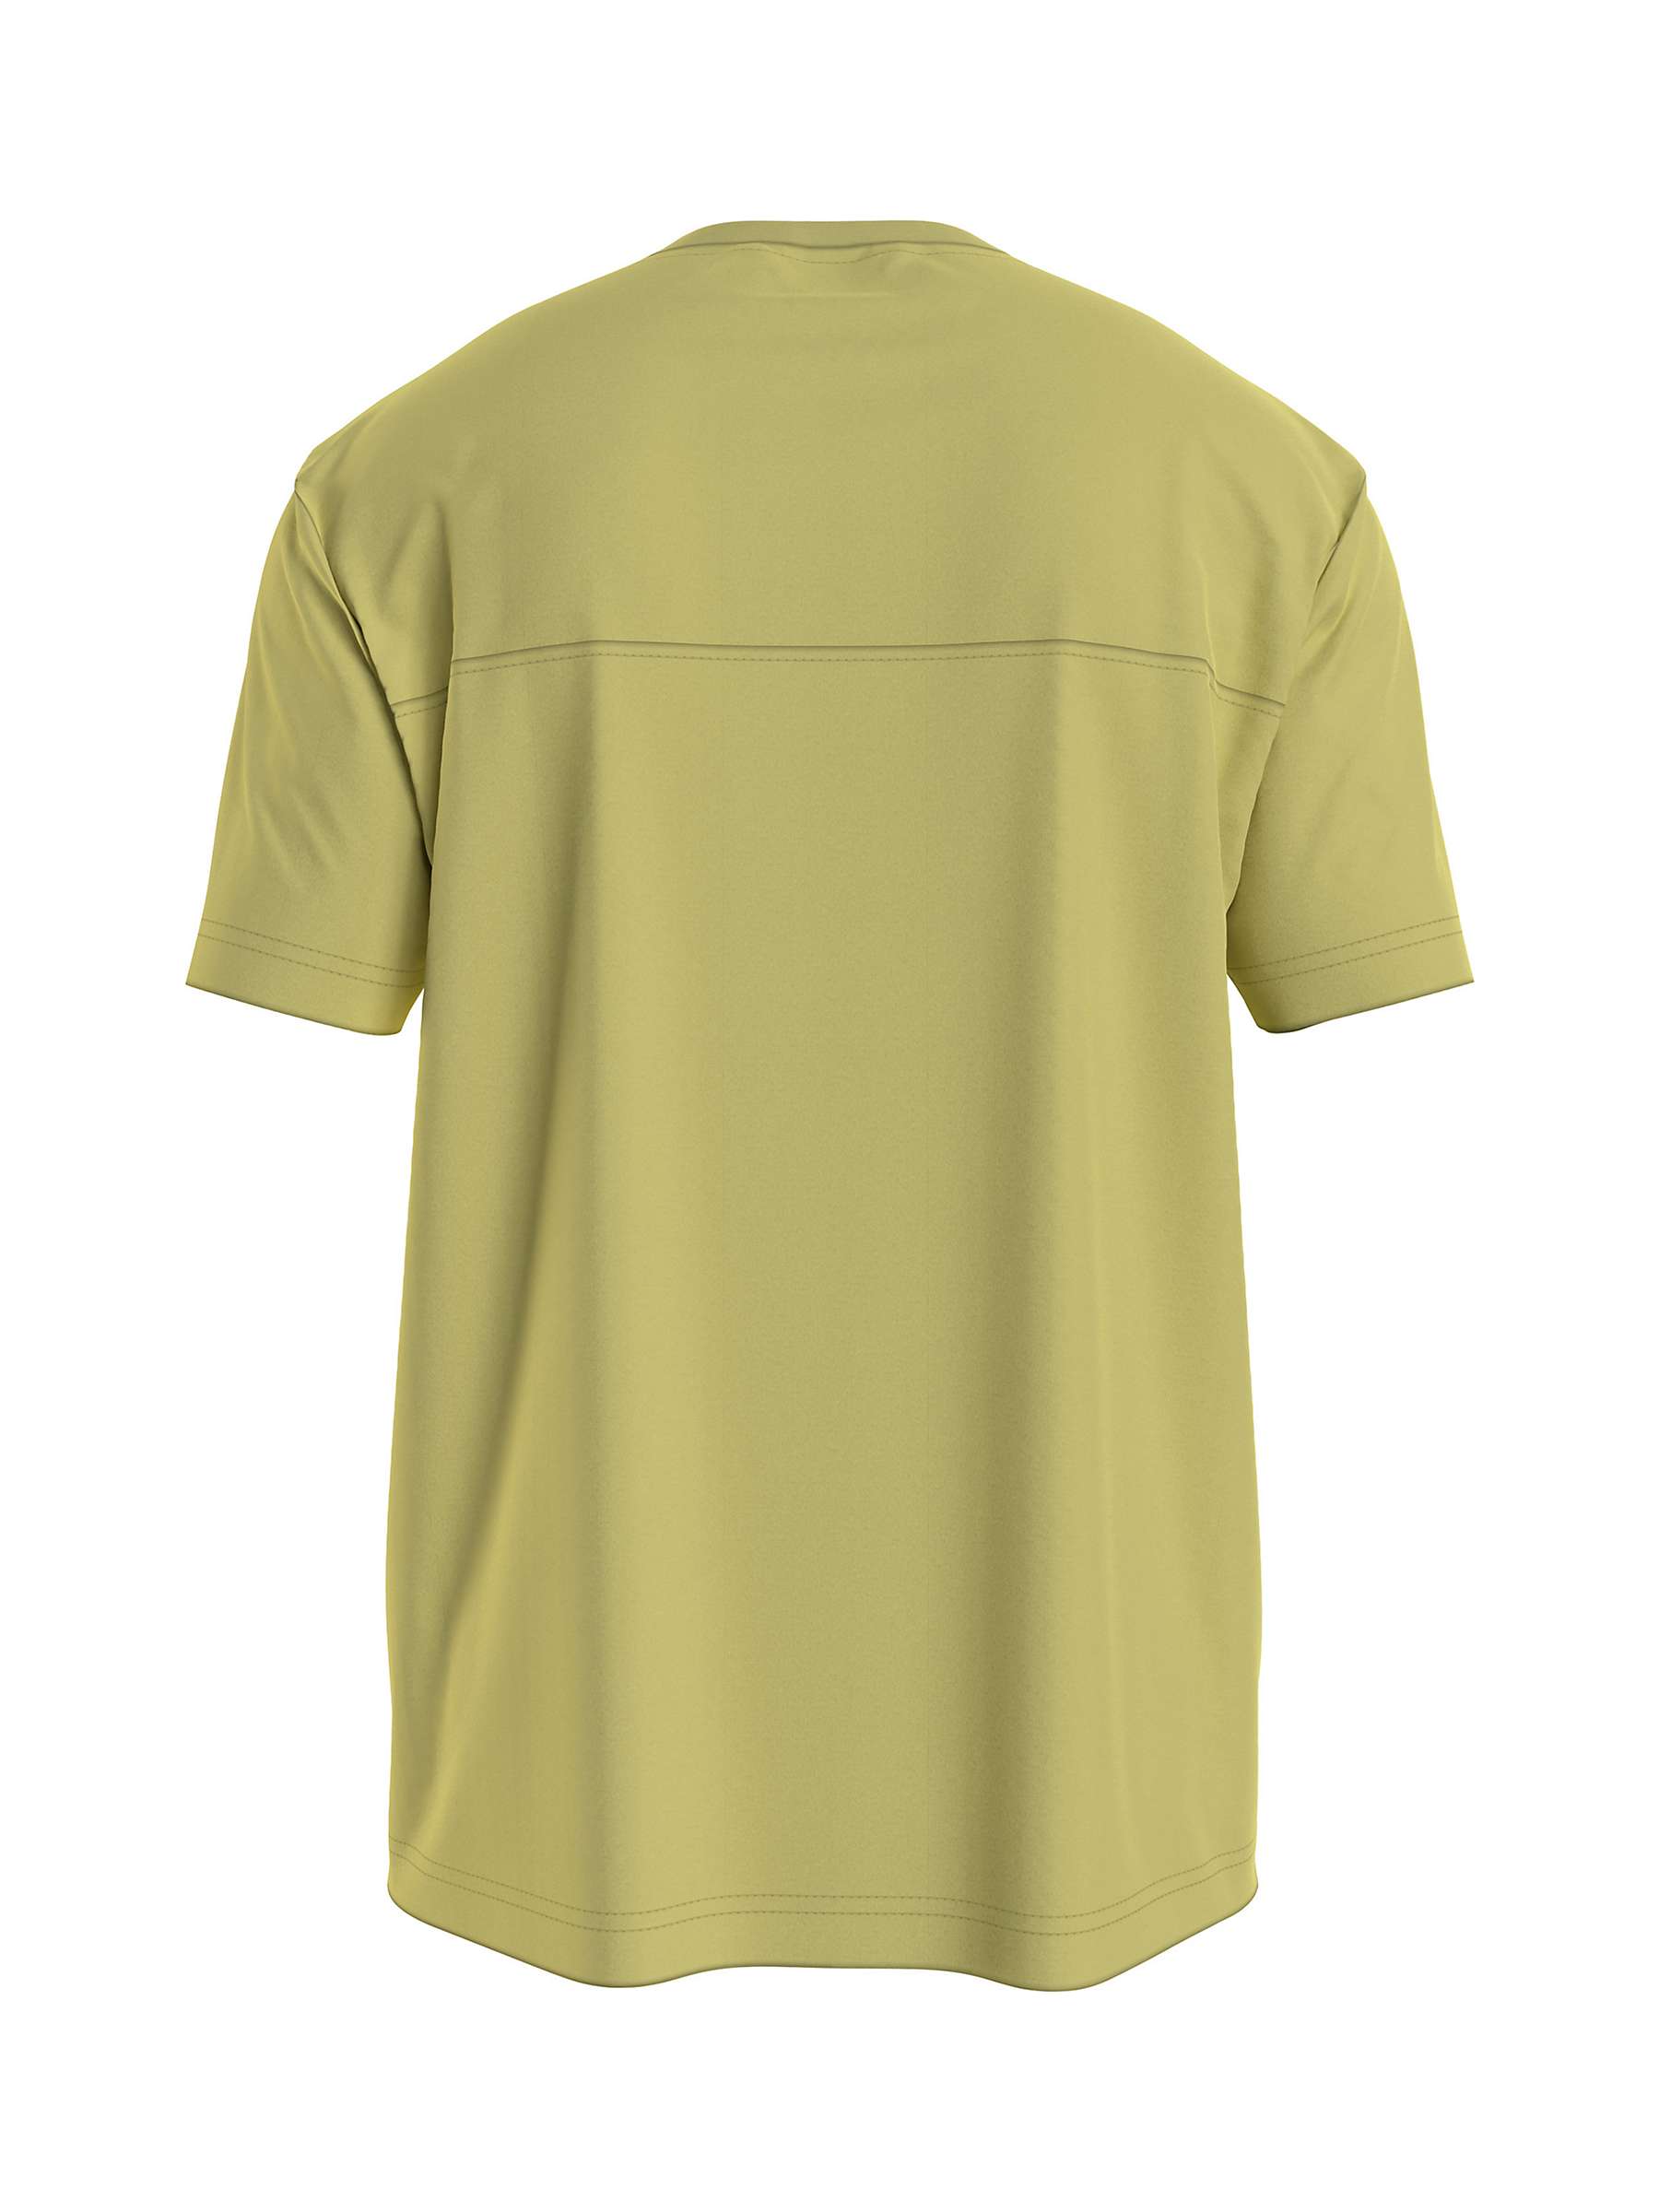 Buy Calvin Klein Logo T-Shirt, Yellow Sand Online at johnlewis.com